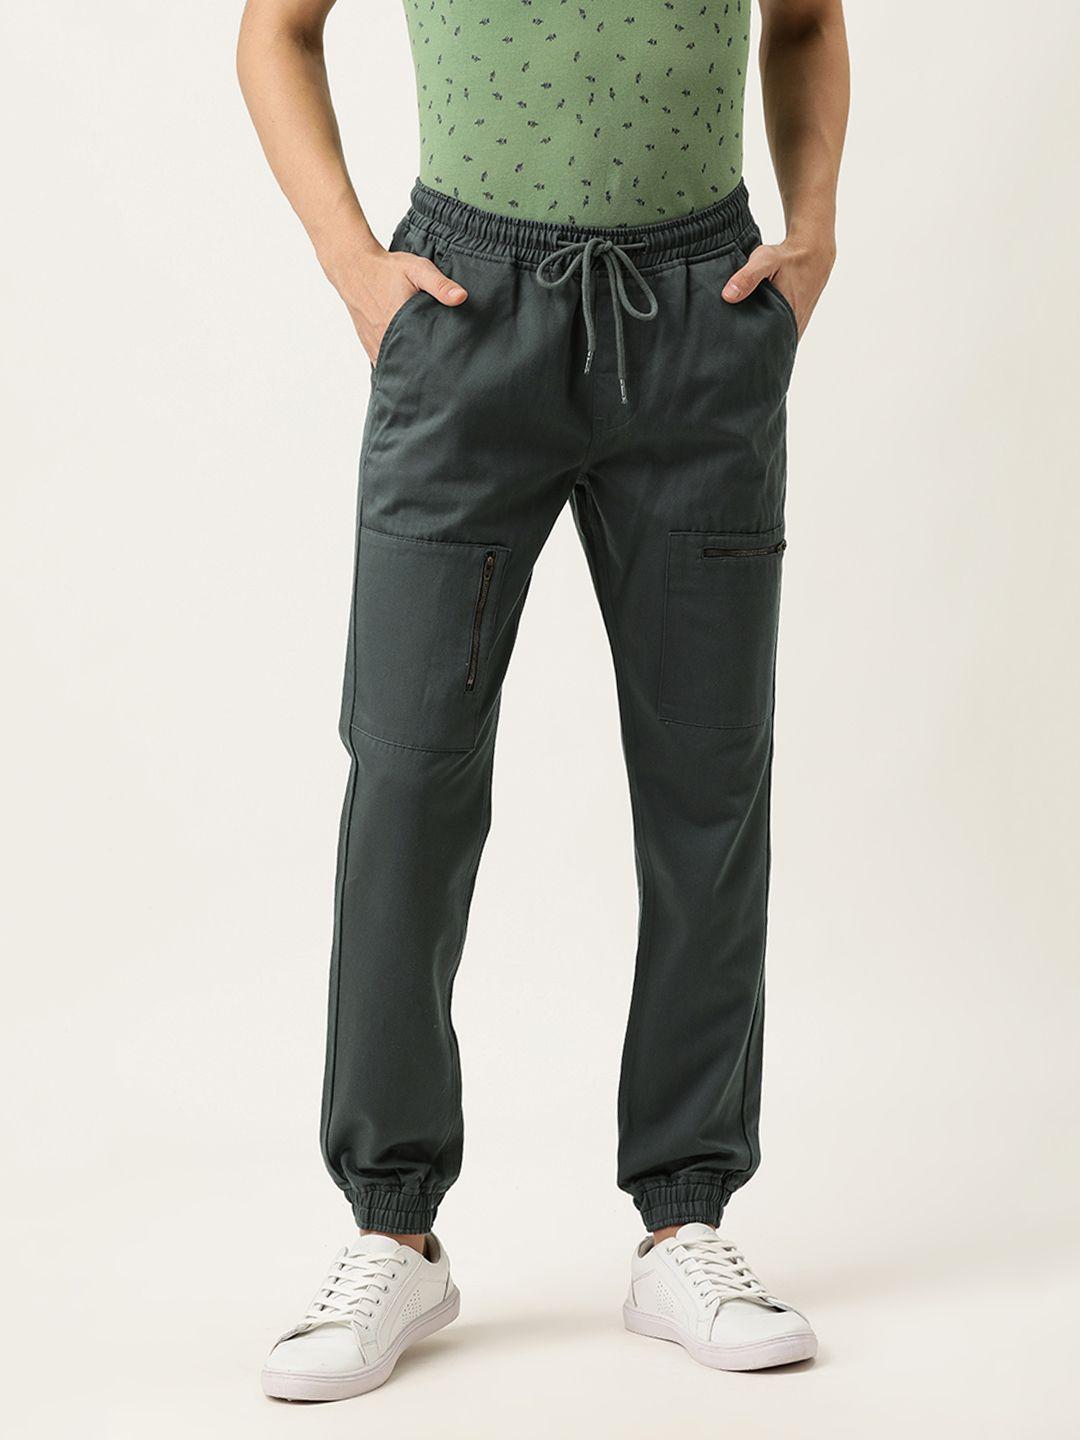 ivoc-men-grey-slim-fit-joggers-trousers